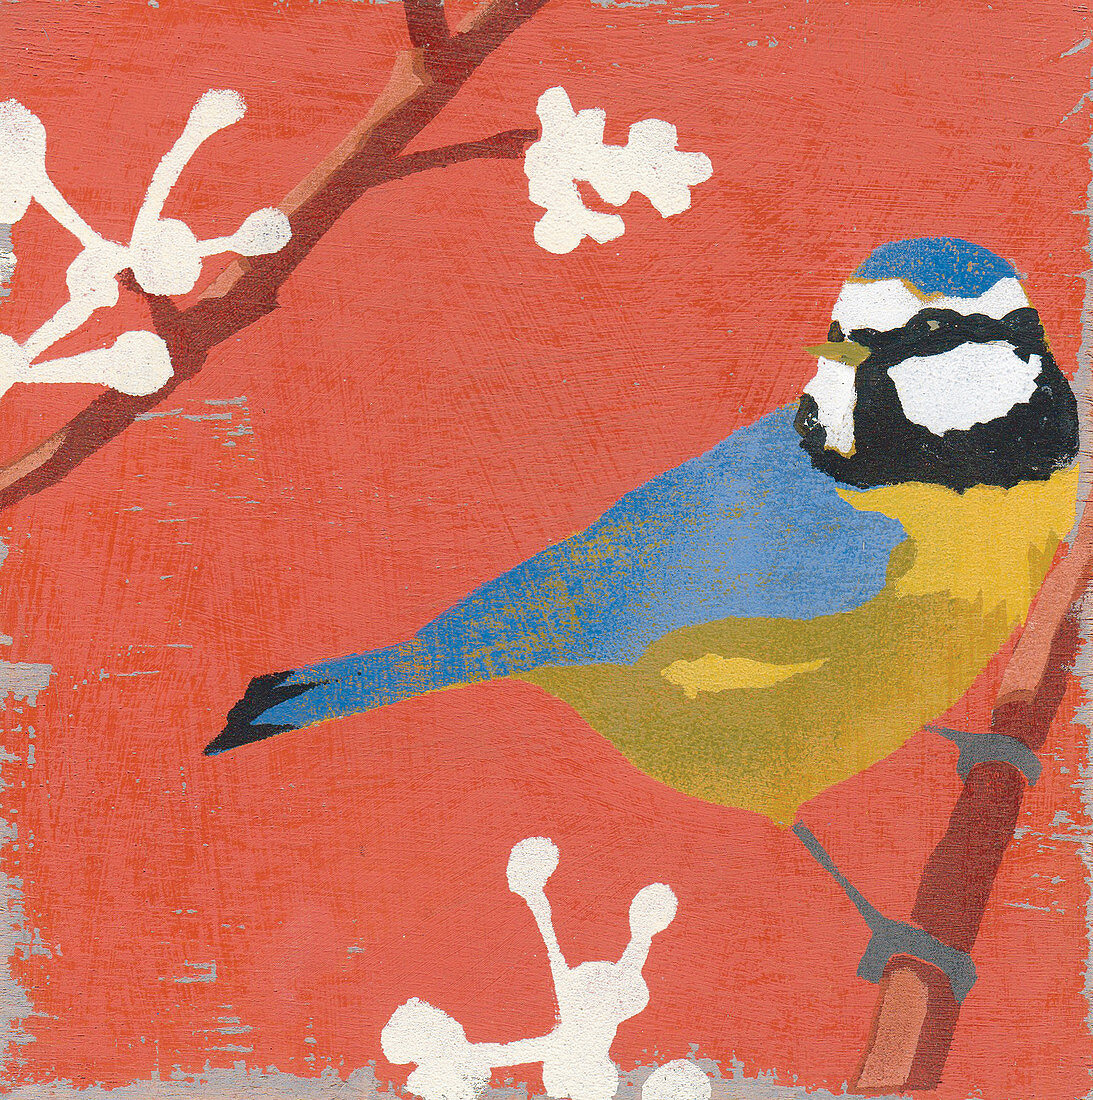 Blue Tit perching on budding branch, illustration